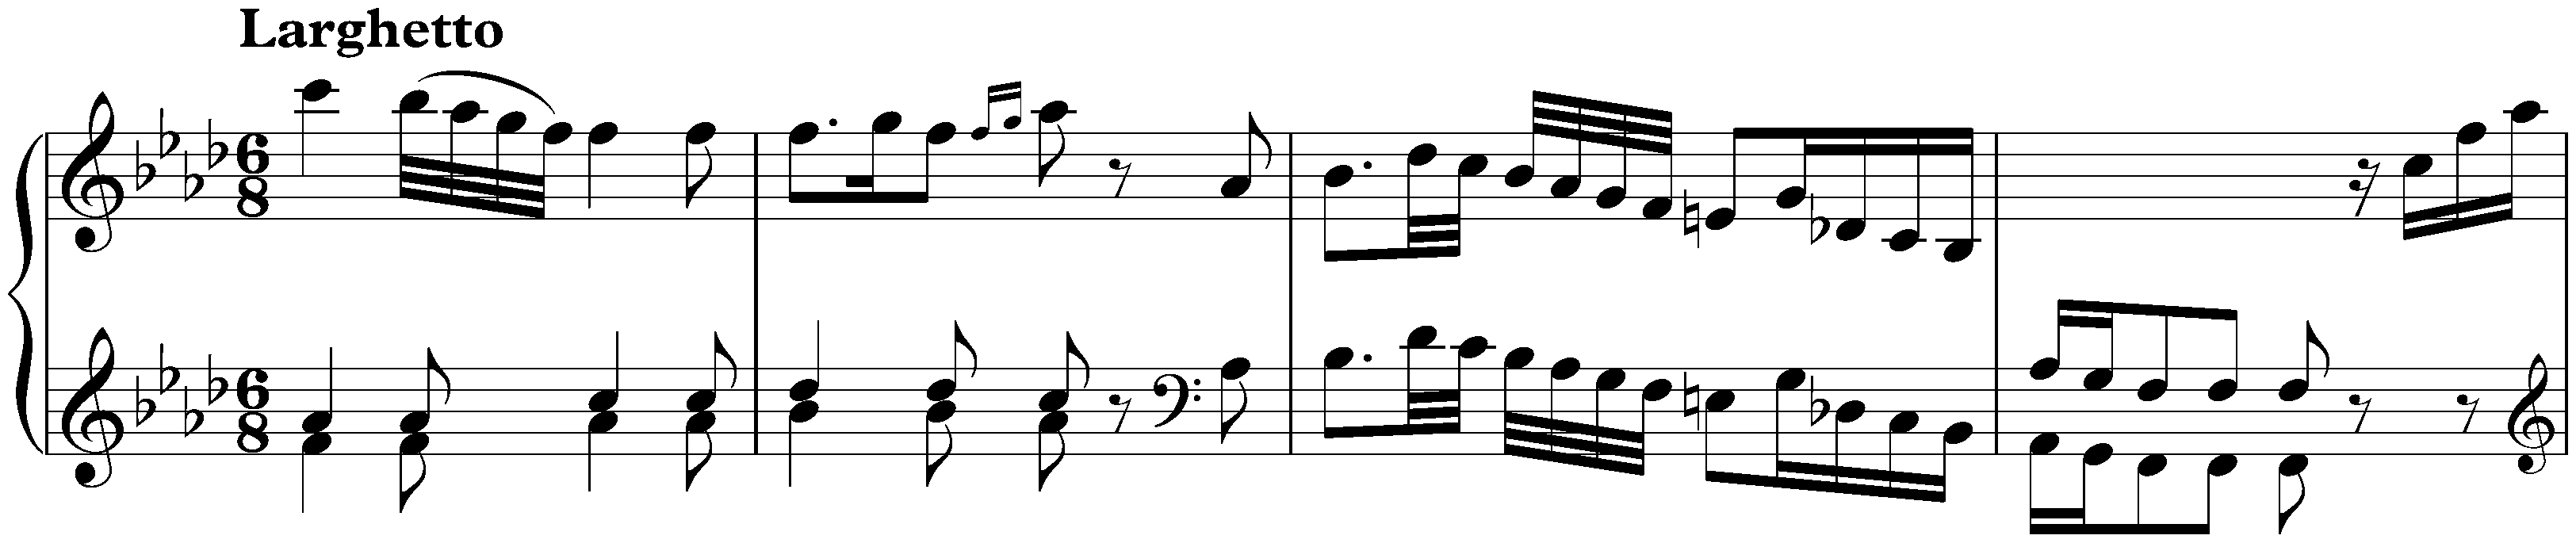 Sonata in F major, Hob. XVI:47; 2. Larghetto